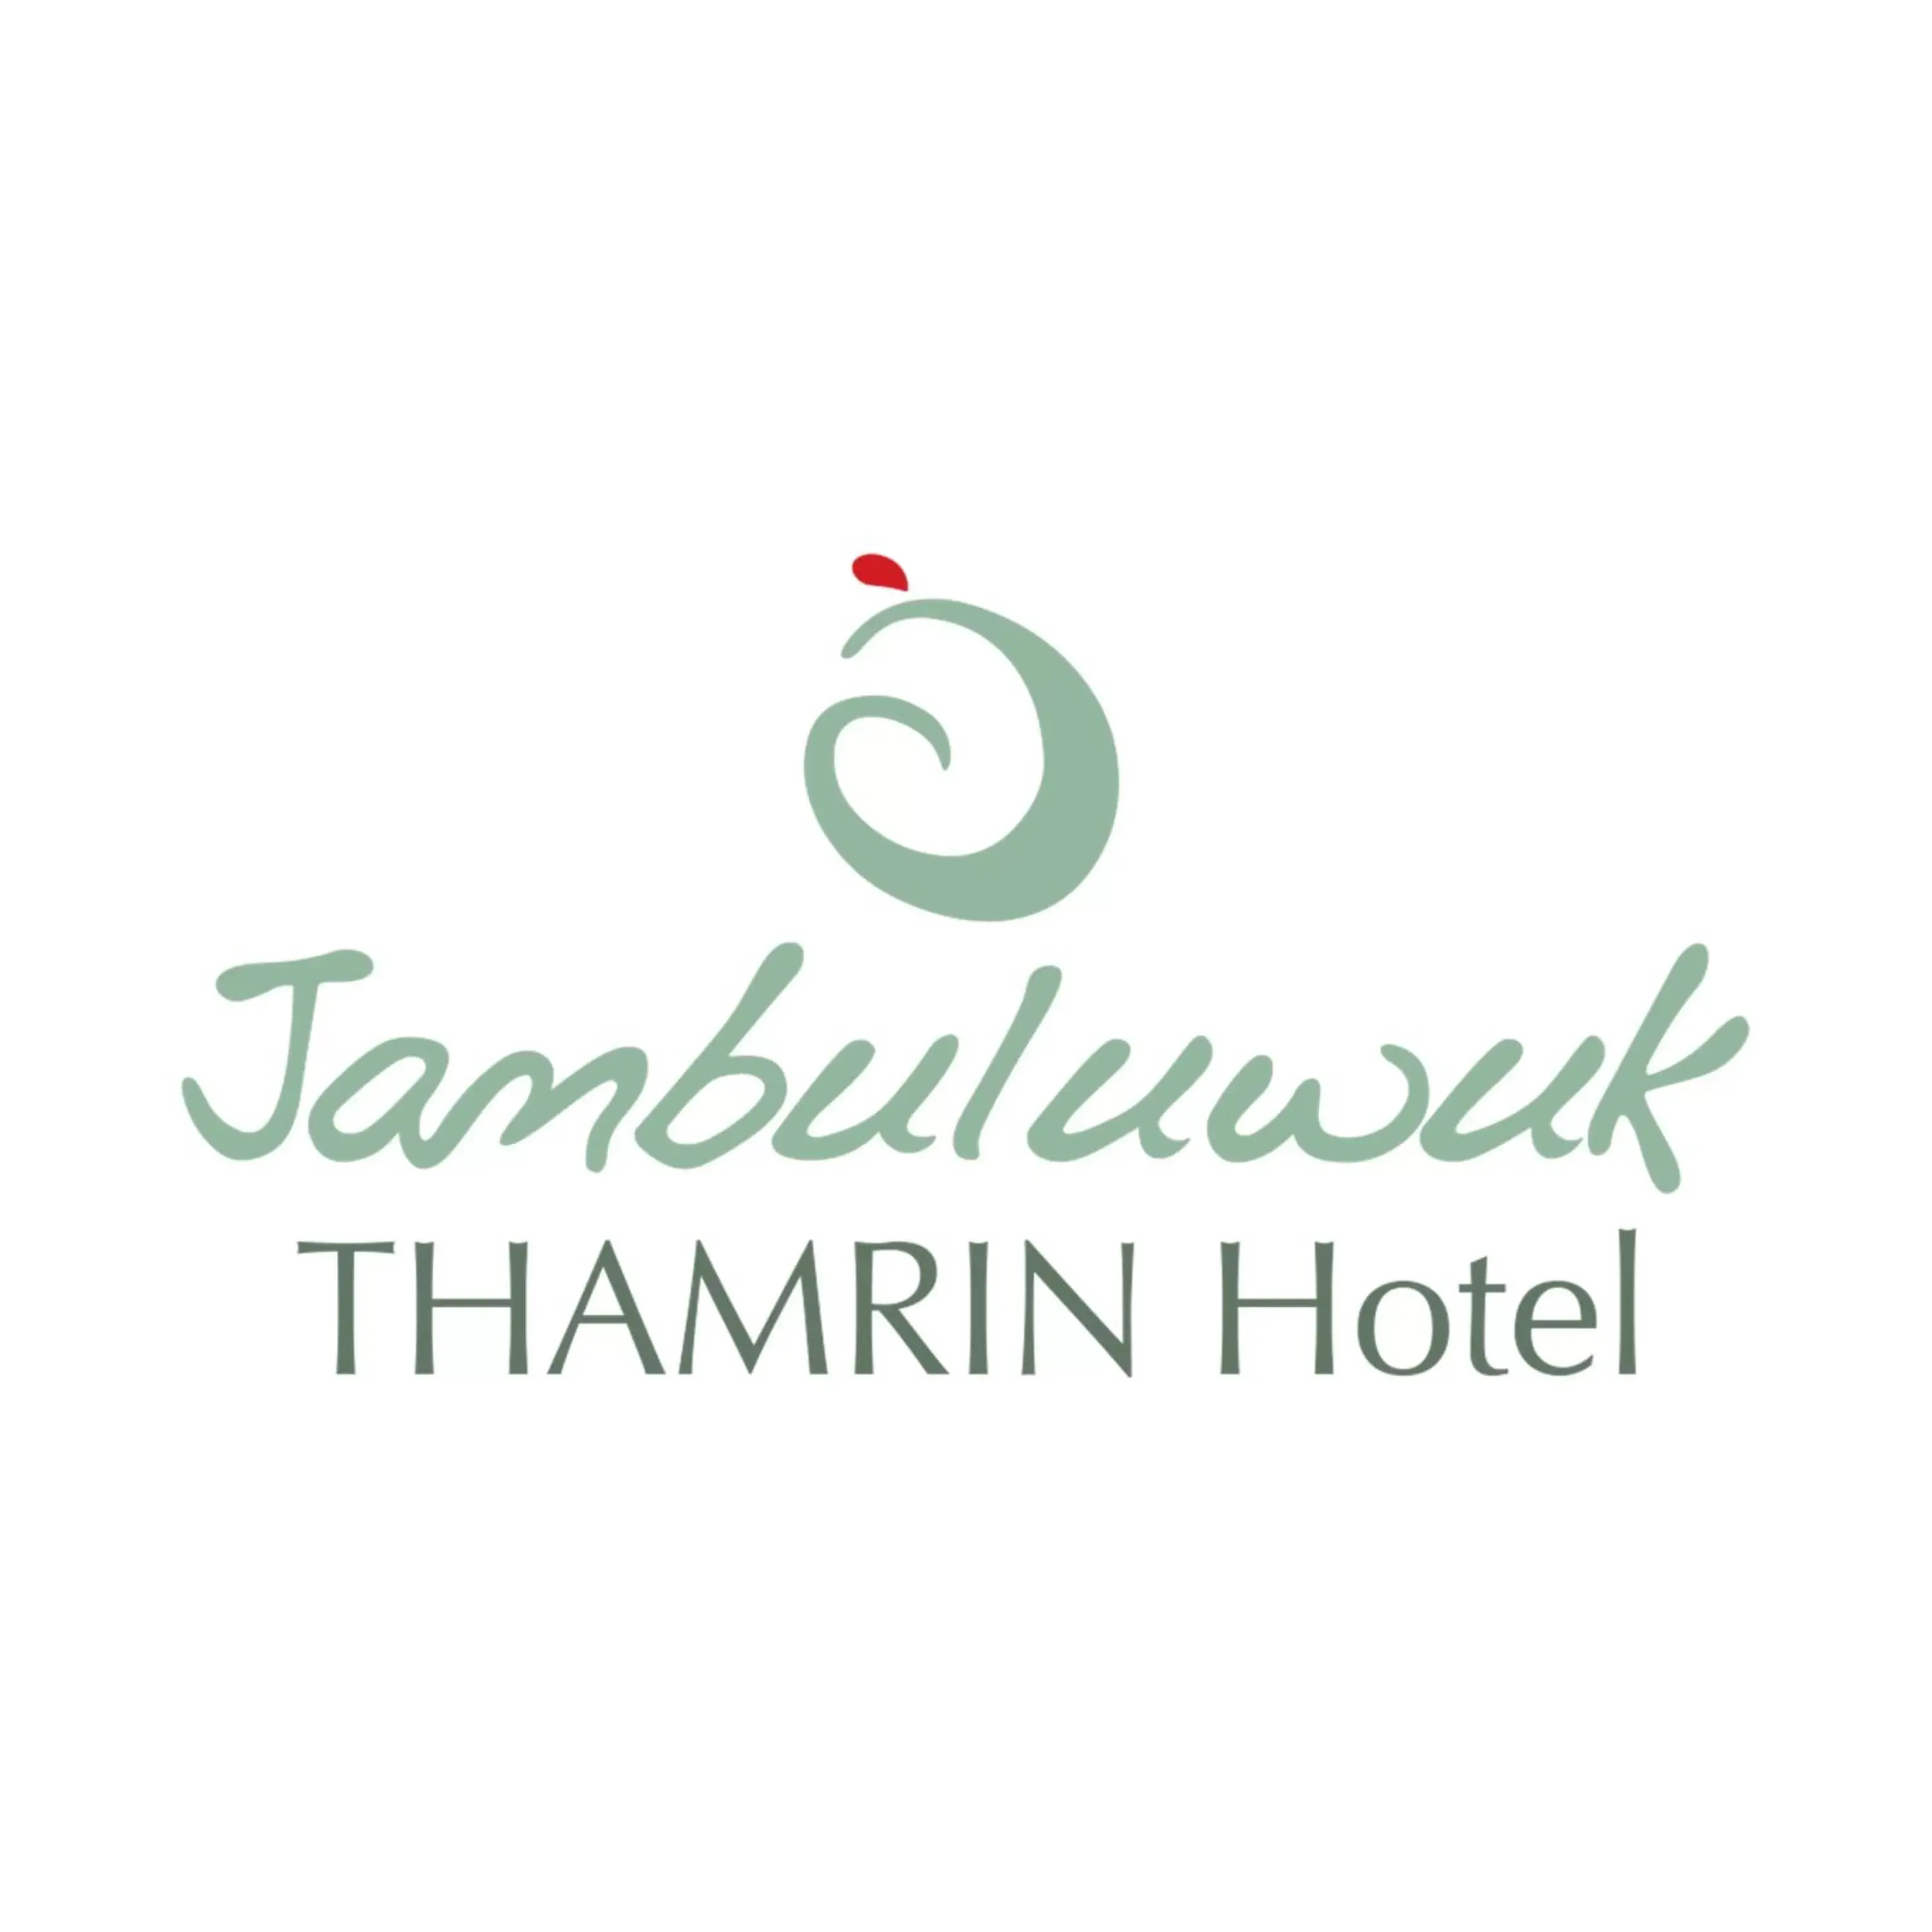 Property logo or sign in Jambuluwuk Thamrin Hotel